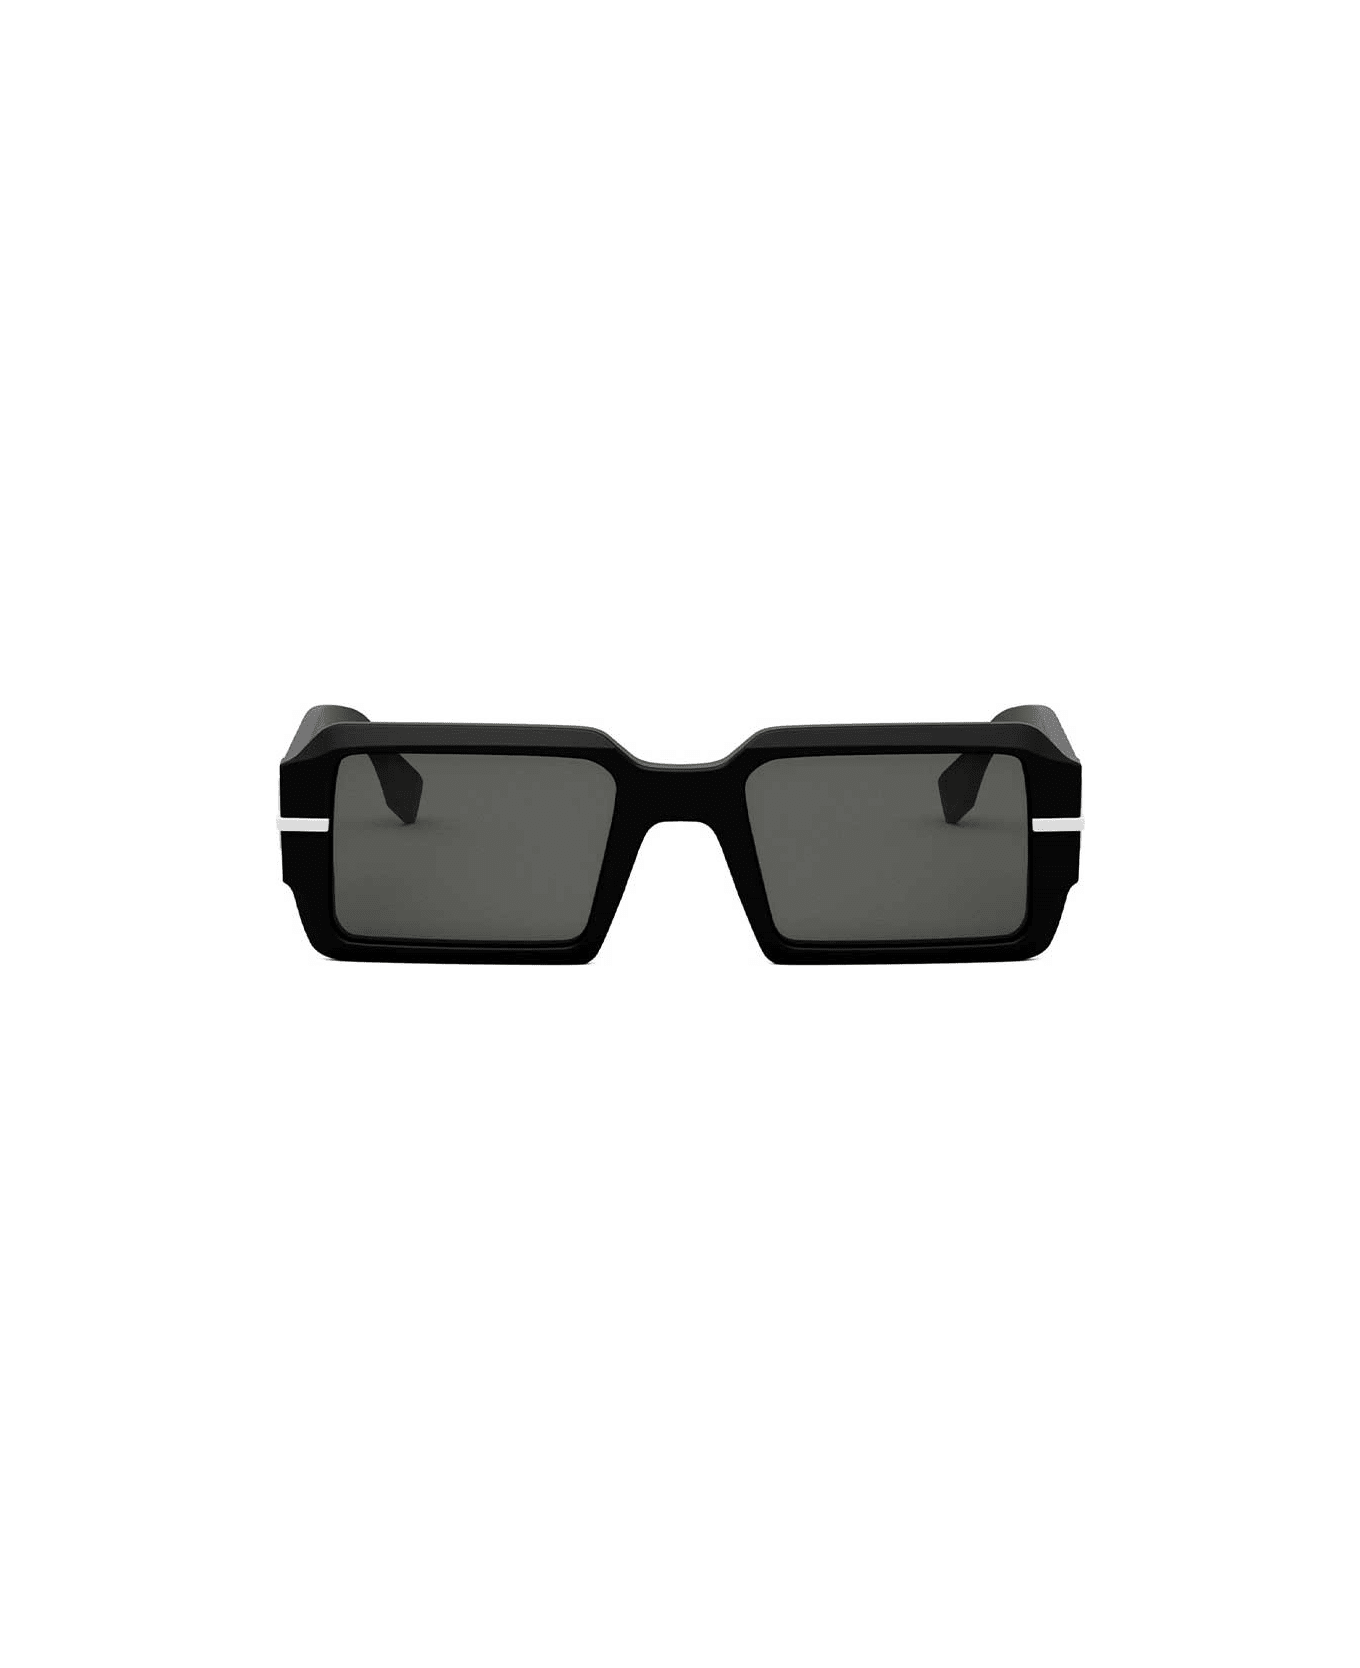 Fendi Eyewear Sunglasses - 02a サングラス